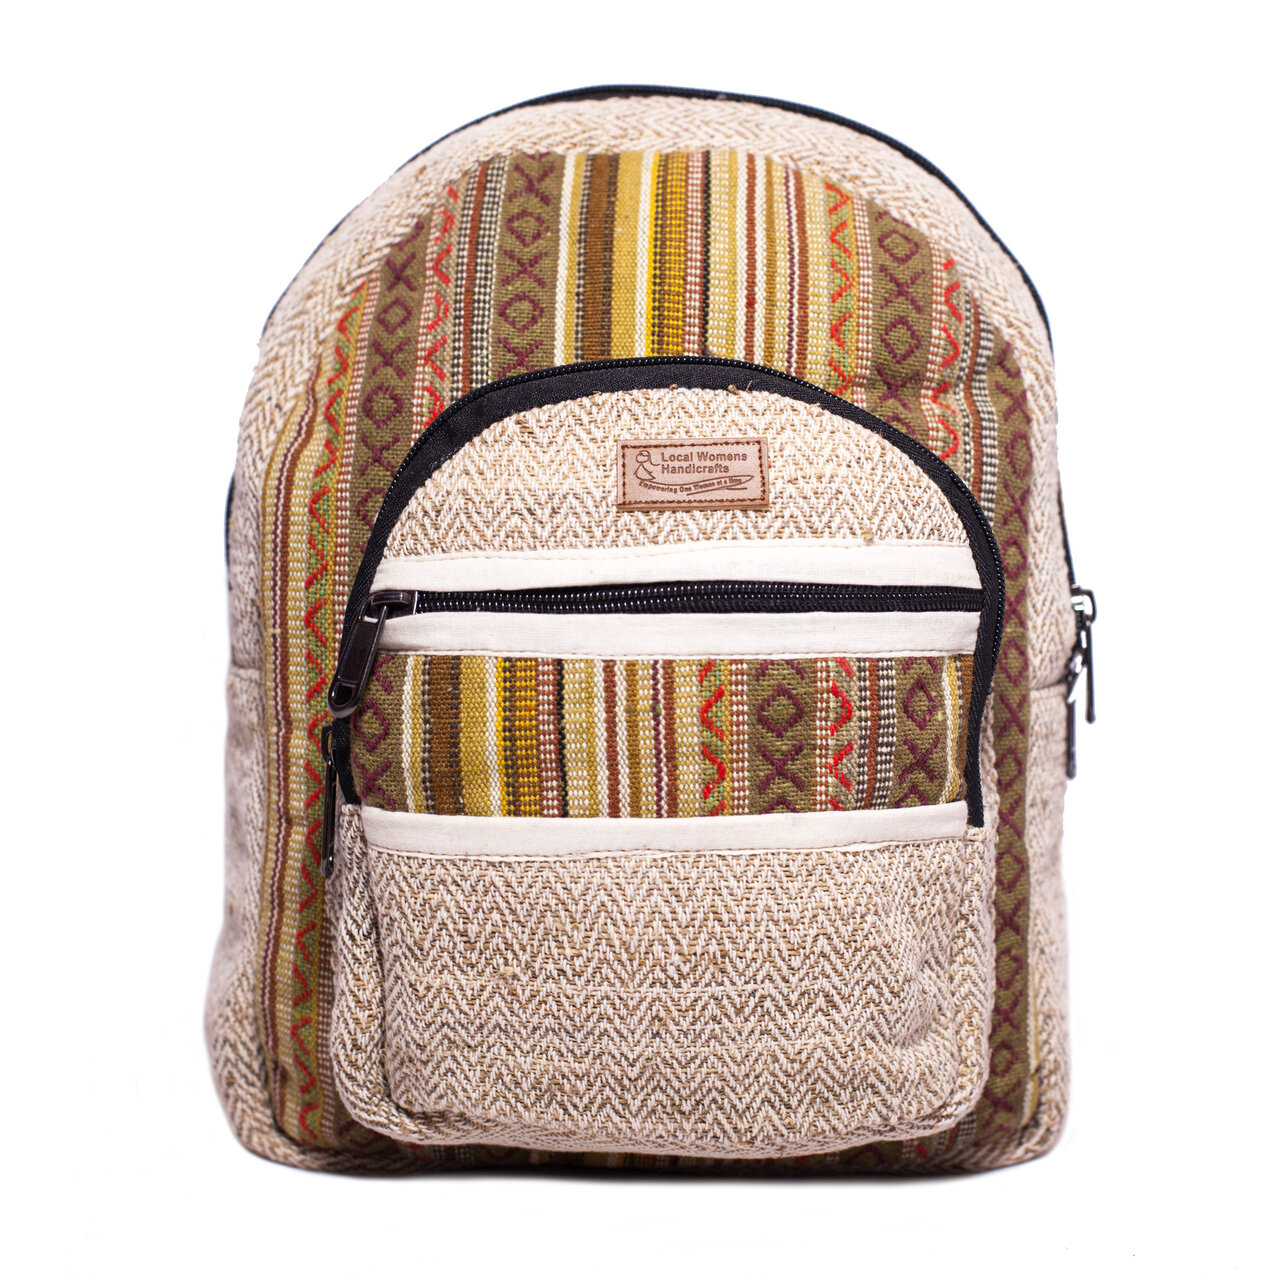 Handloomed Cotton Hemp Backpack